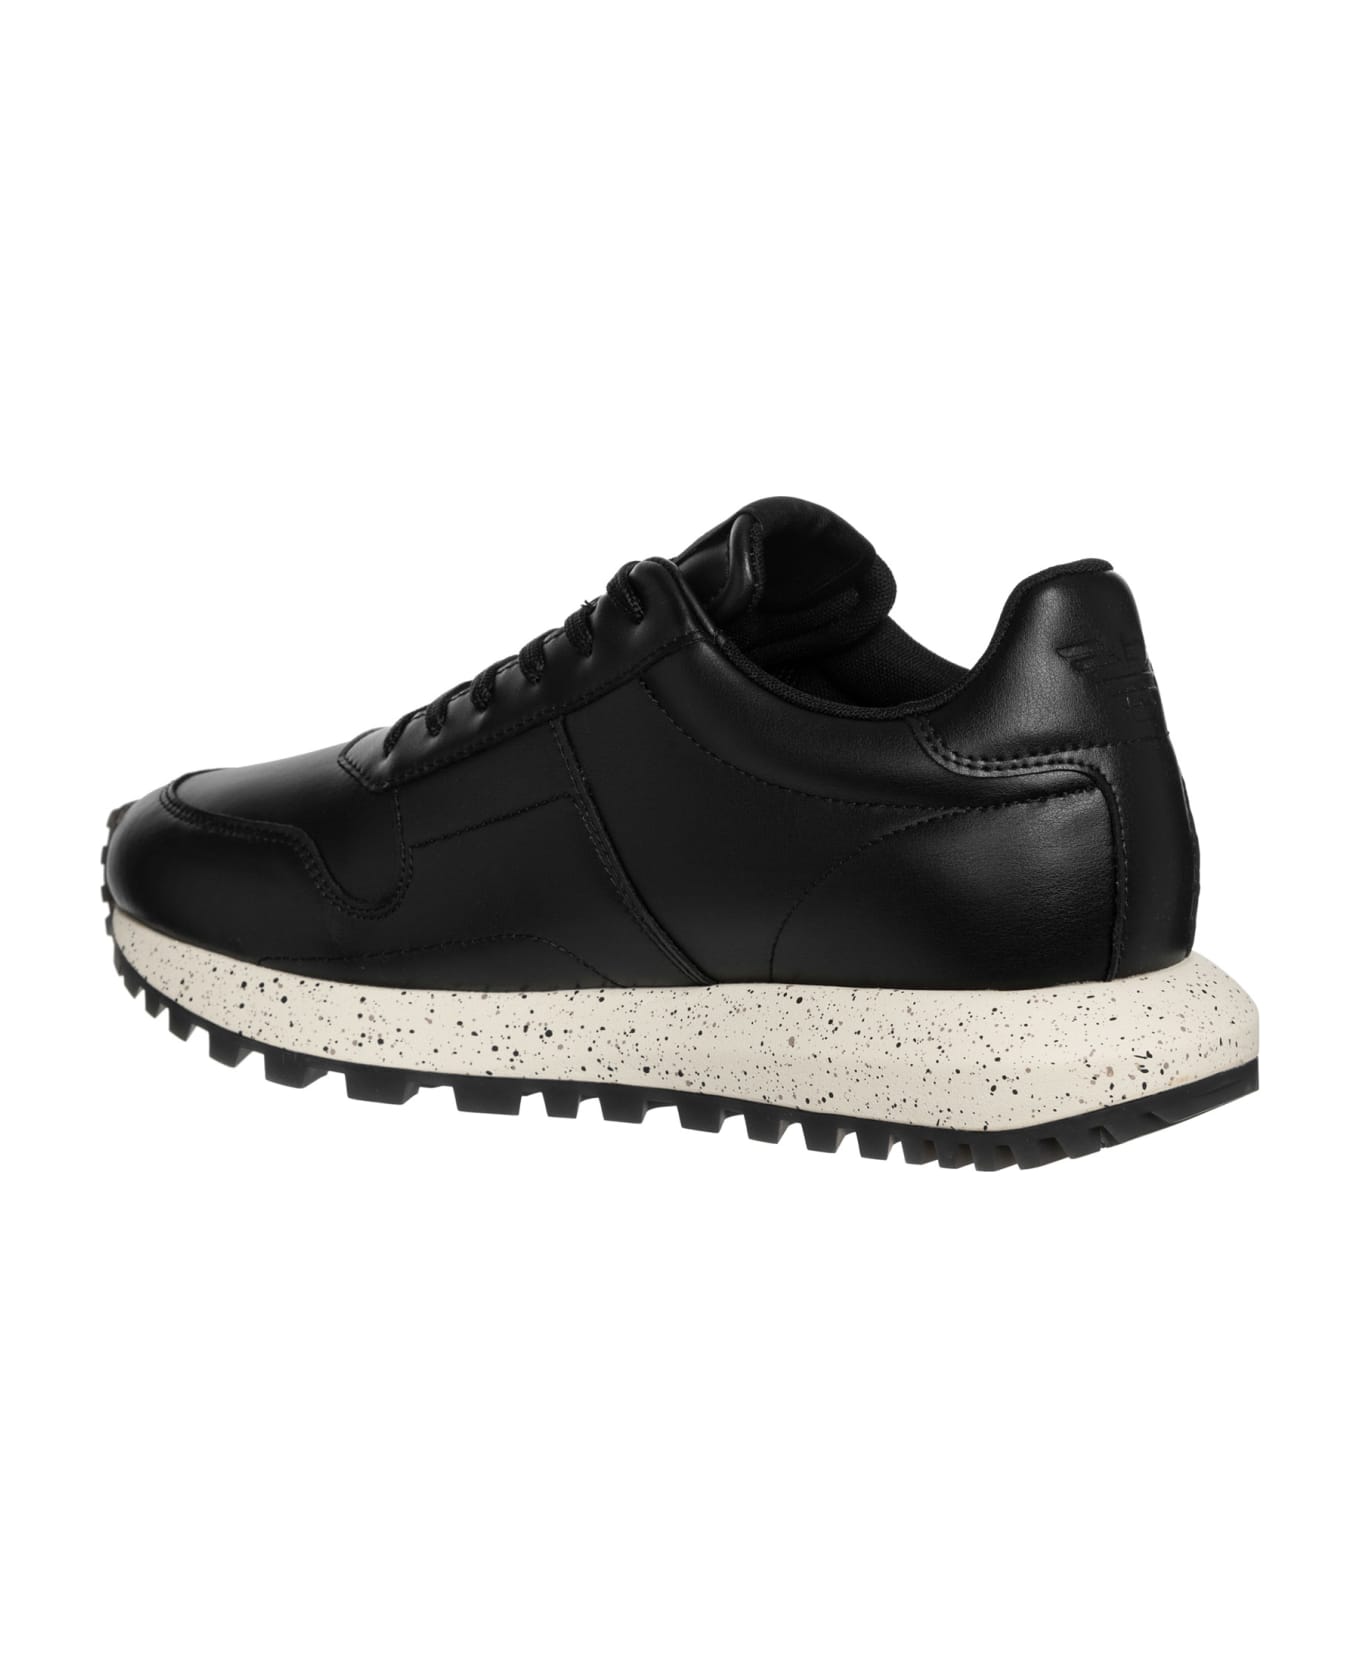 Emporio Armani Leather Sneakers - black スニーカー